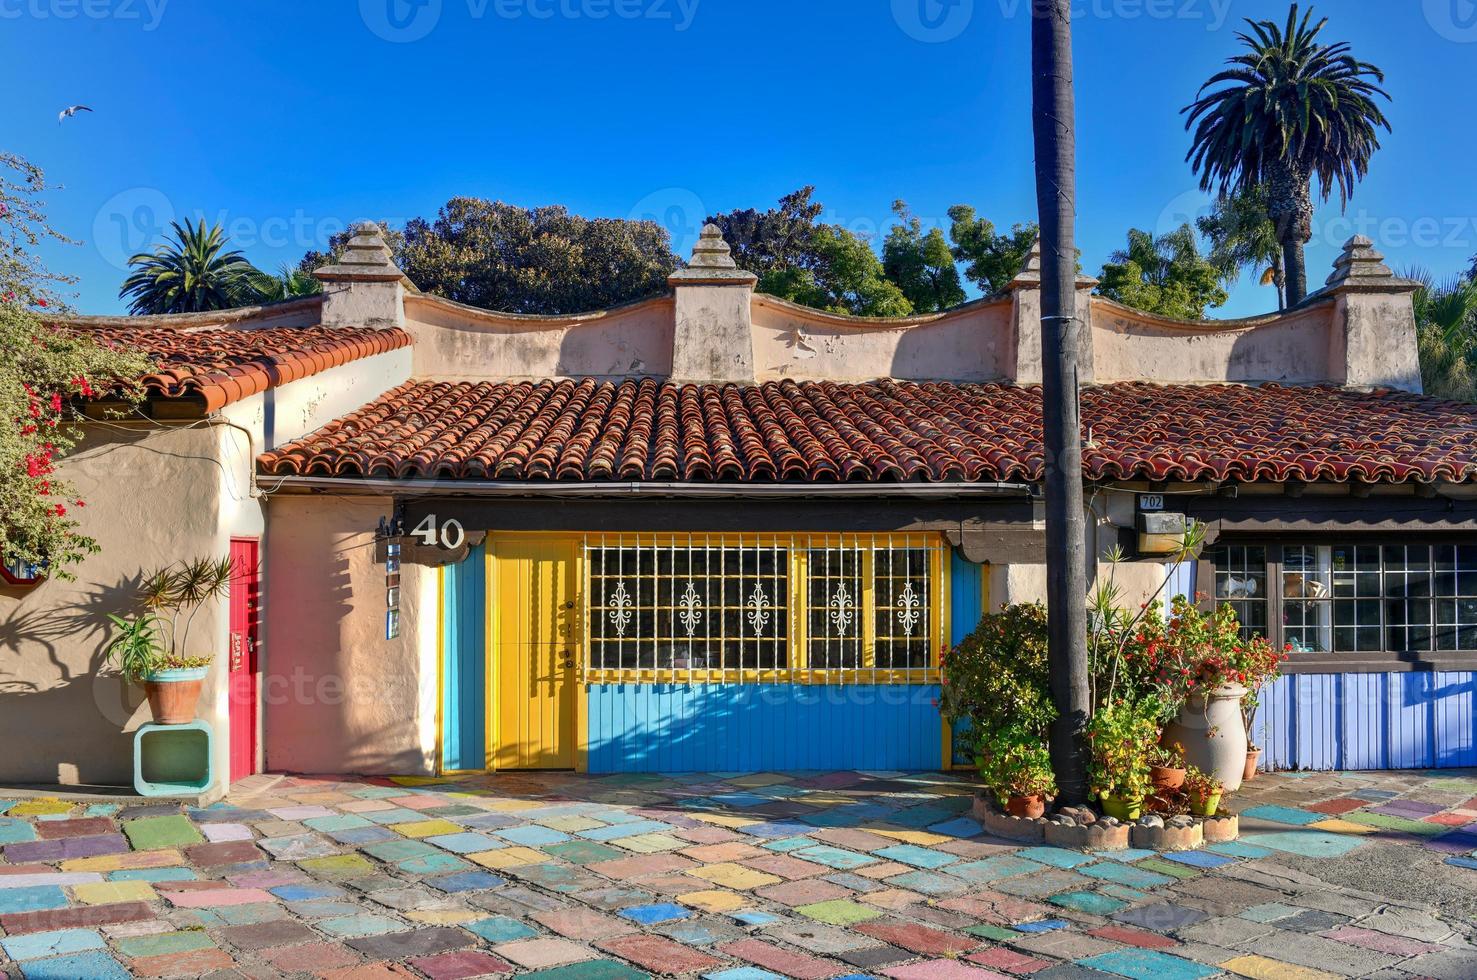 Spaans dorp stuïdo's en exposities balboa park san diego, Californië. foto